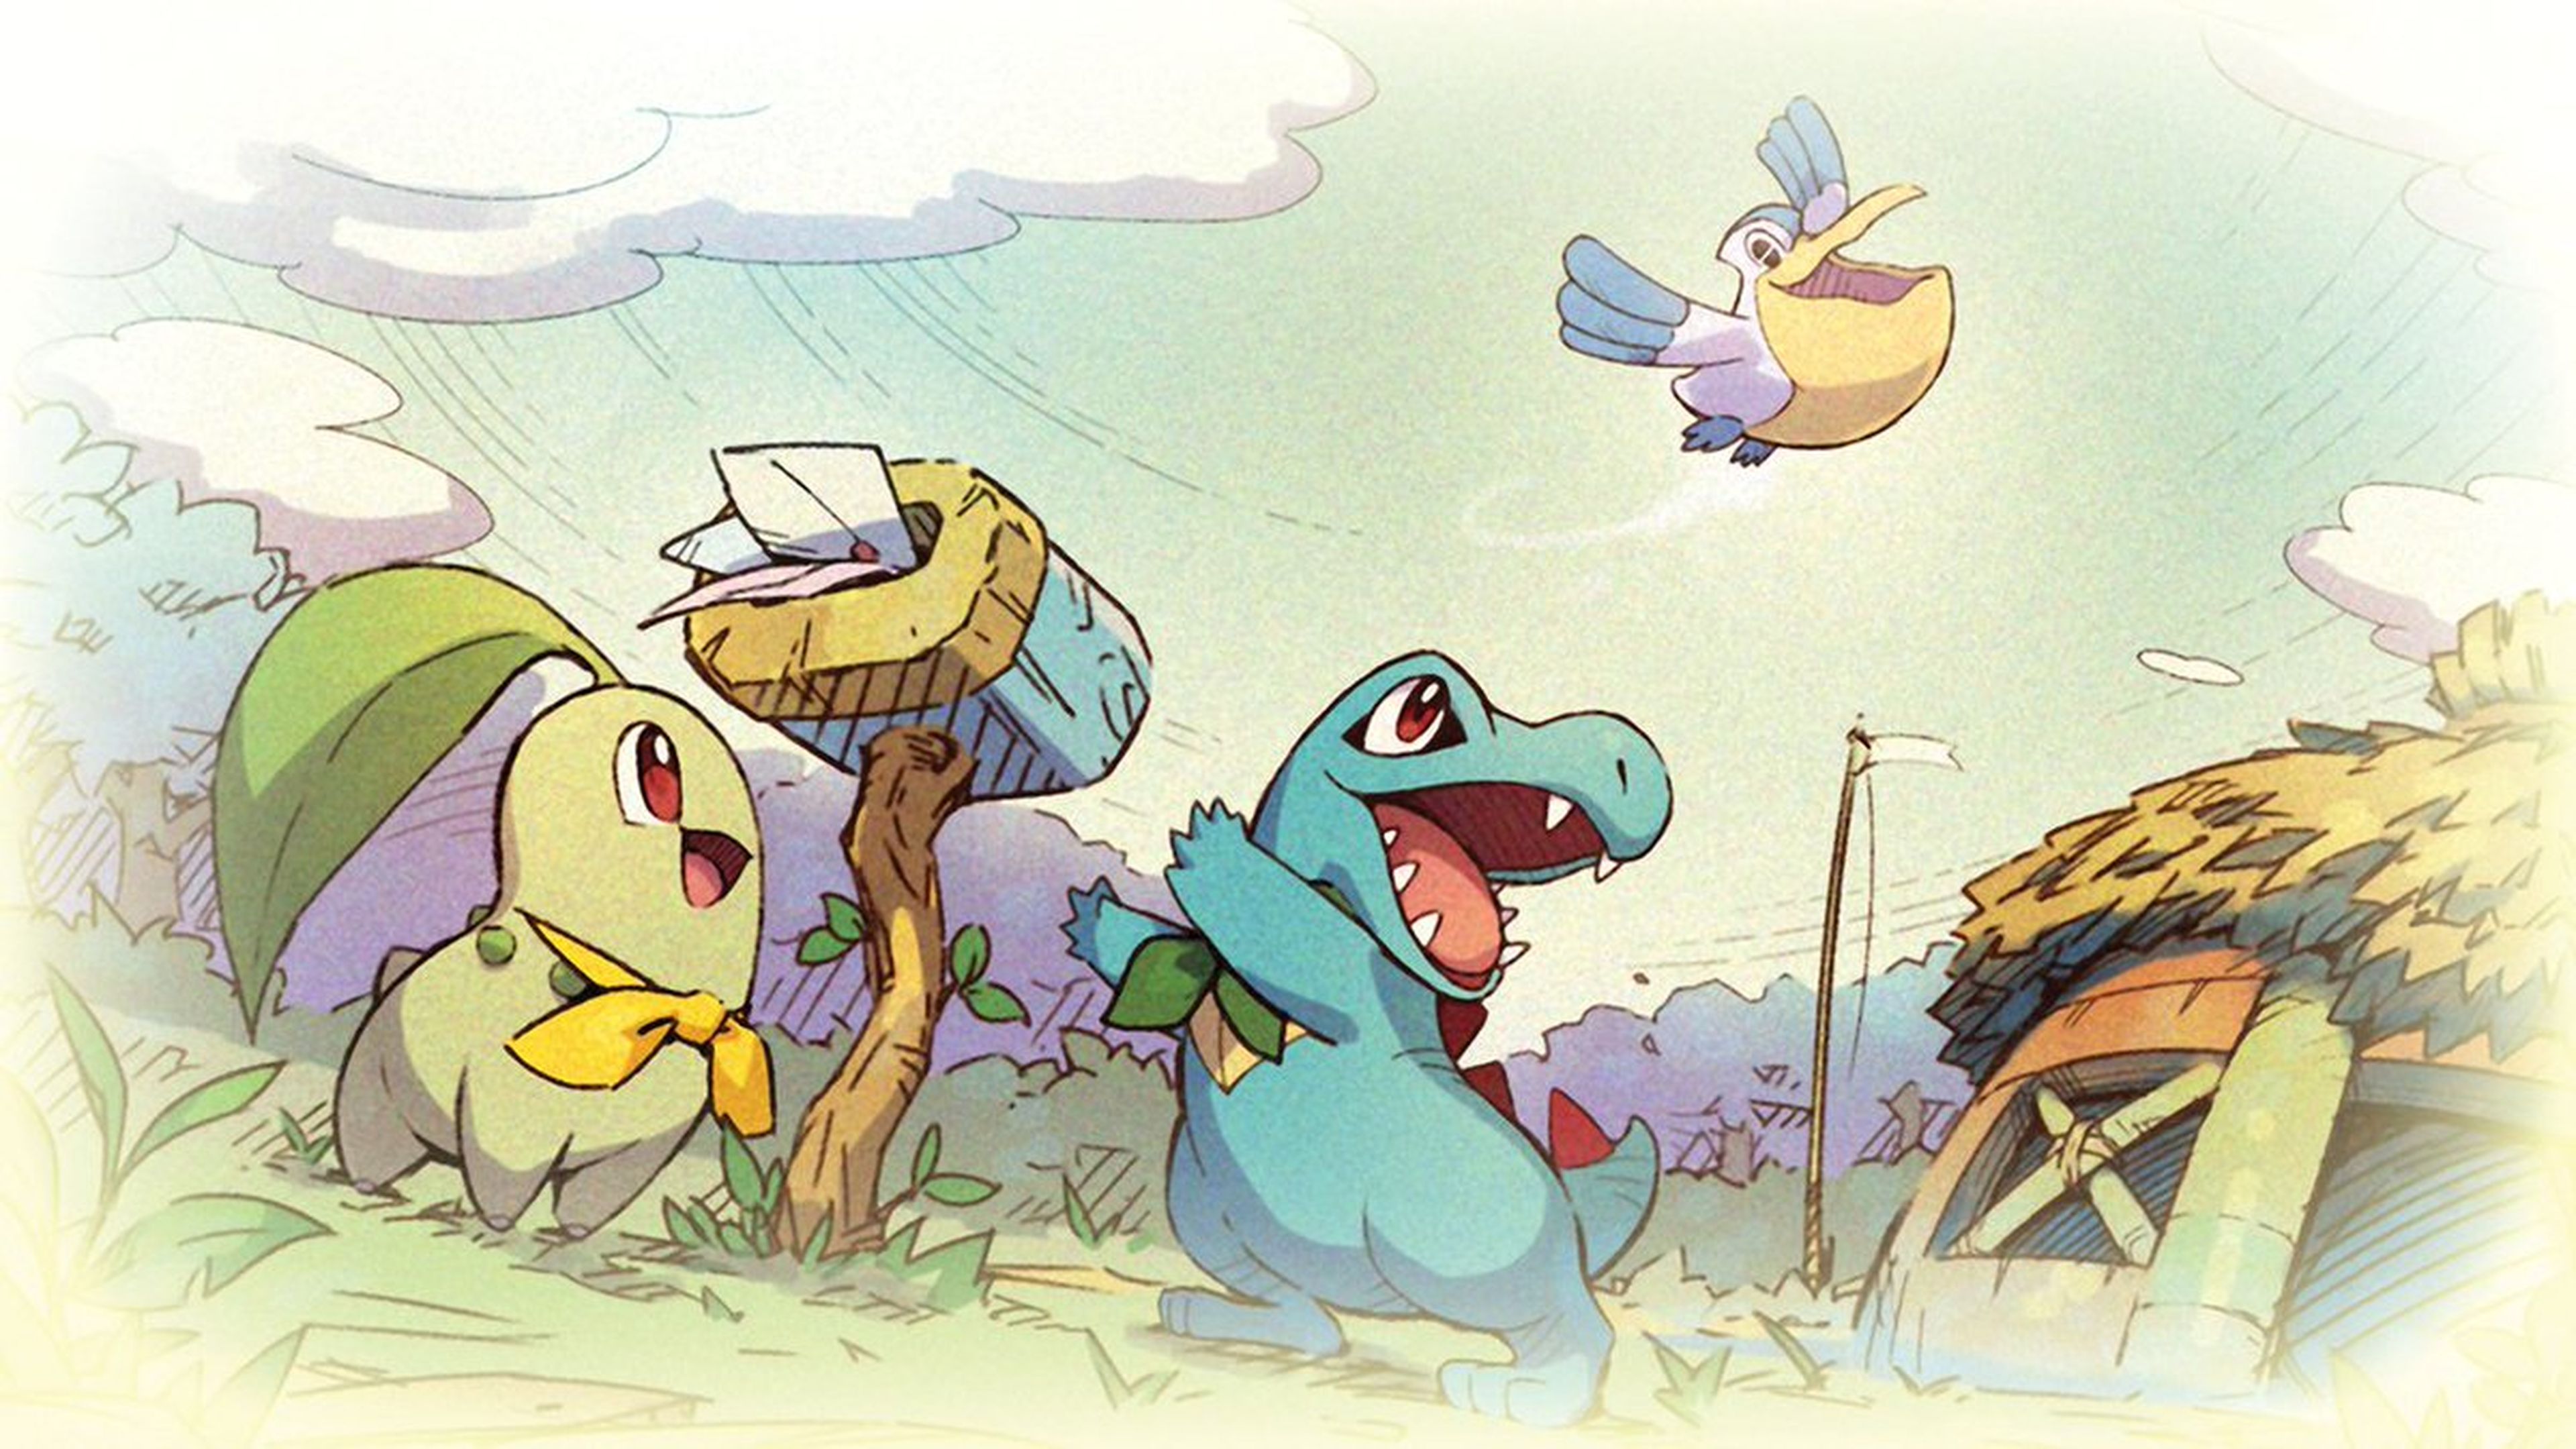 Pokémon Mundo Misterioso Equipo de Rescate DX anunciado para Nintendo Switch  • Centro Pokémon